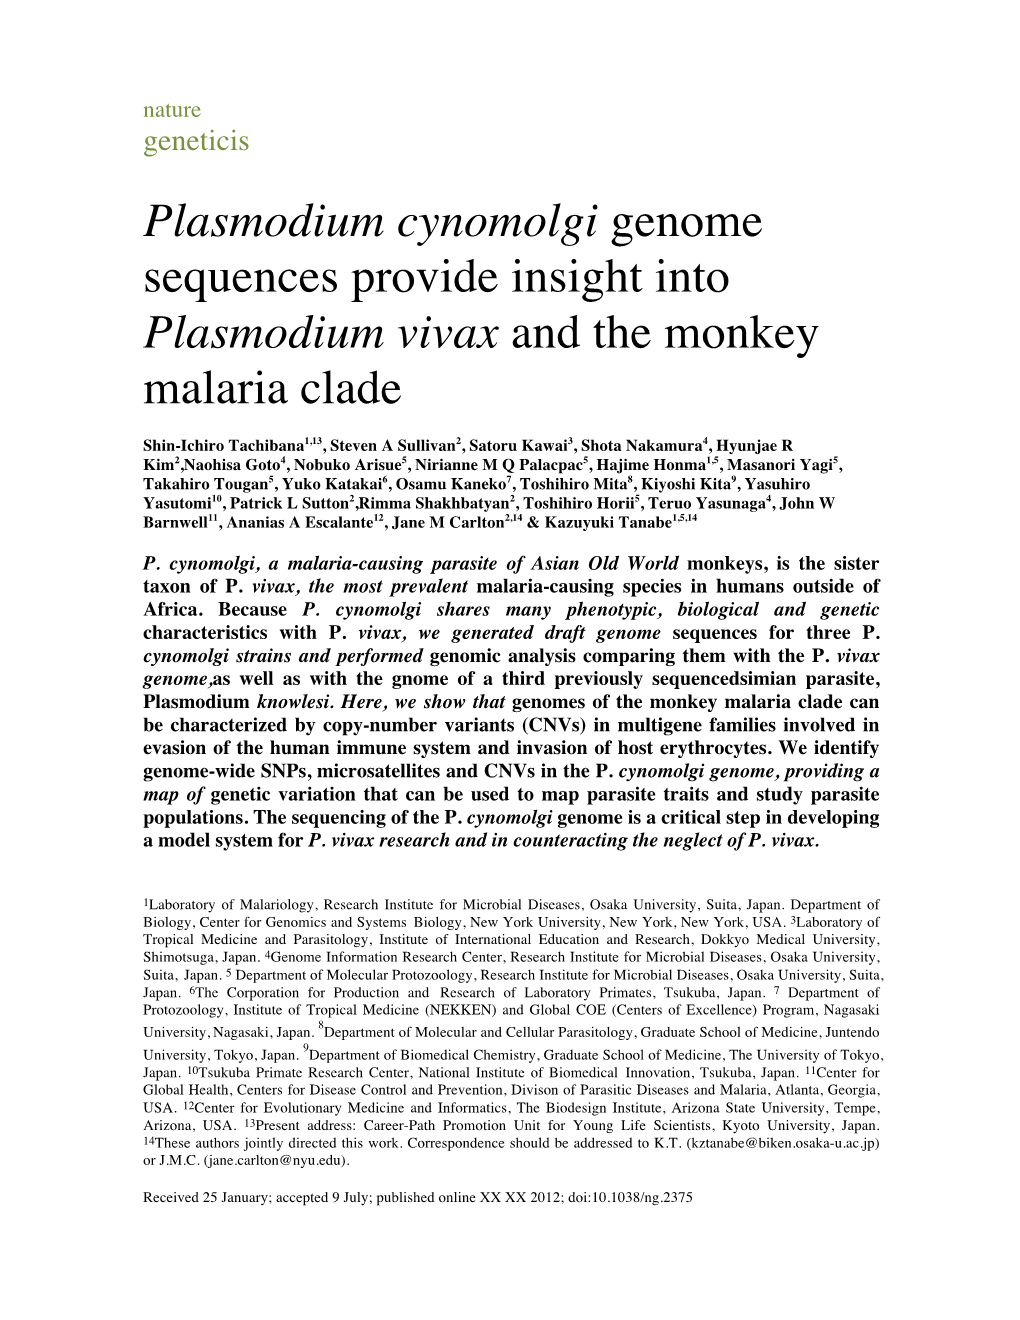 Plasmodium Cynomolgi Genome Sequences Provide Insight Into Plasmodium Vivax and the Monkey Malaria Clade